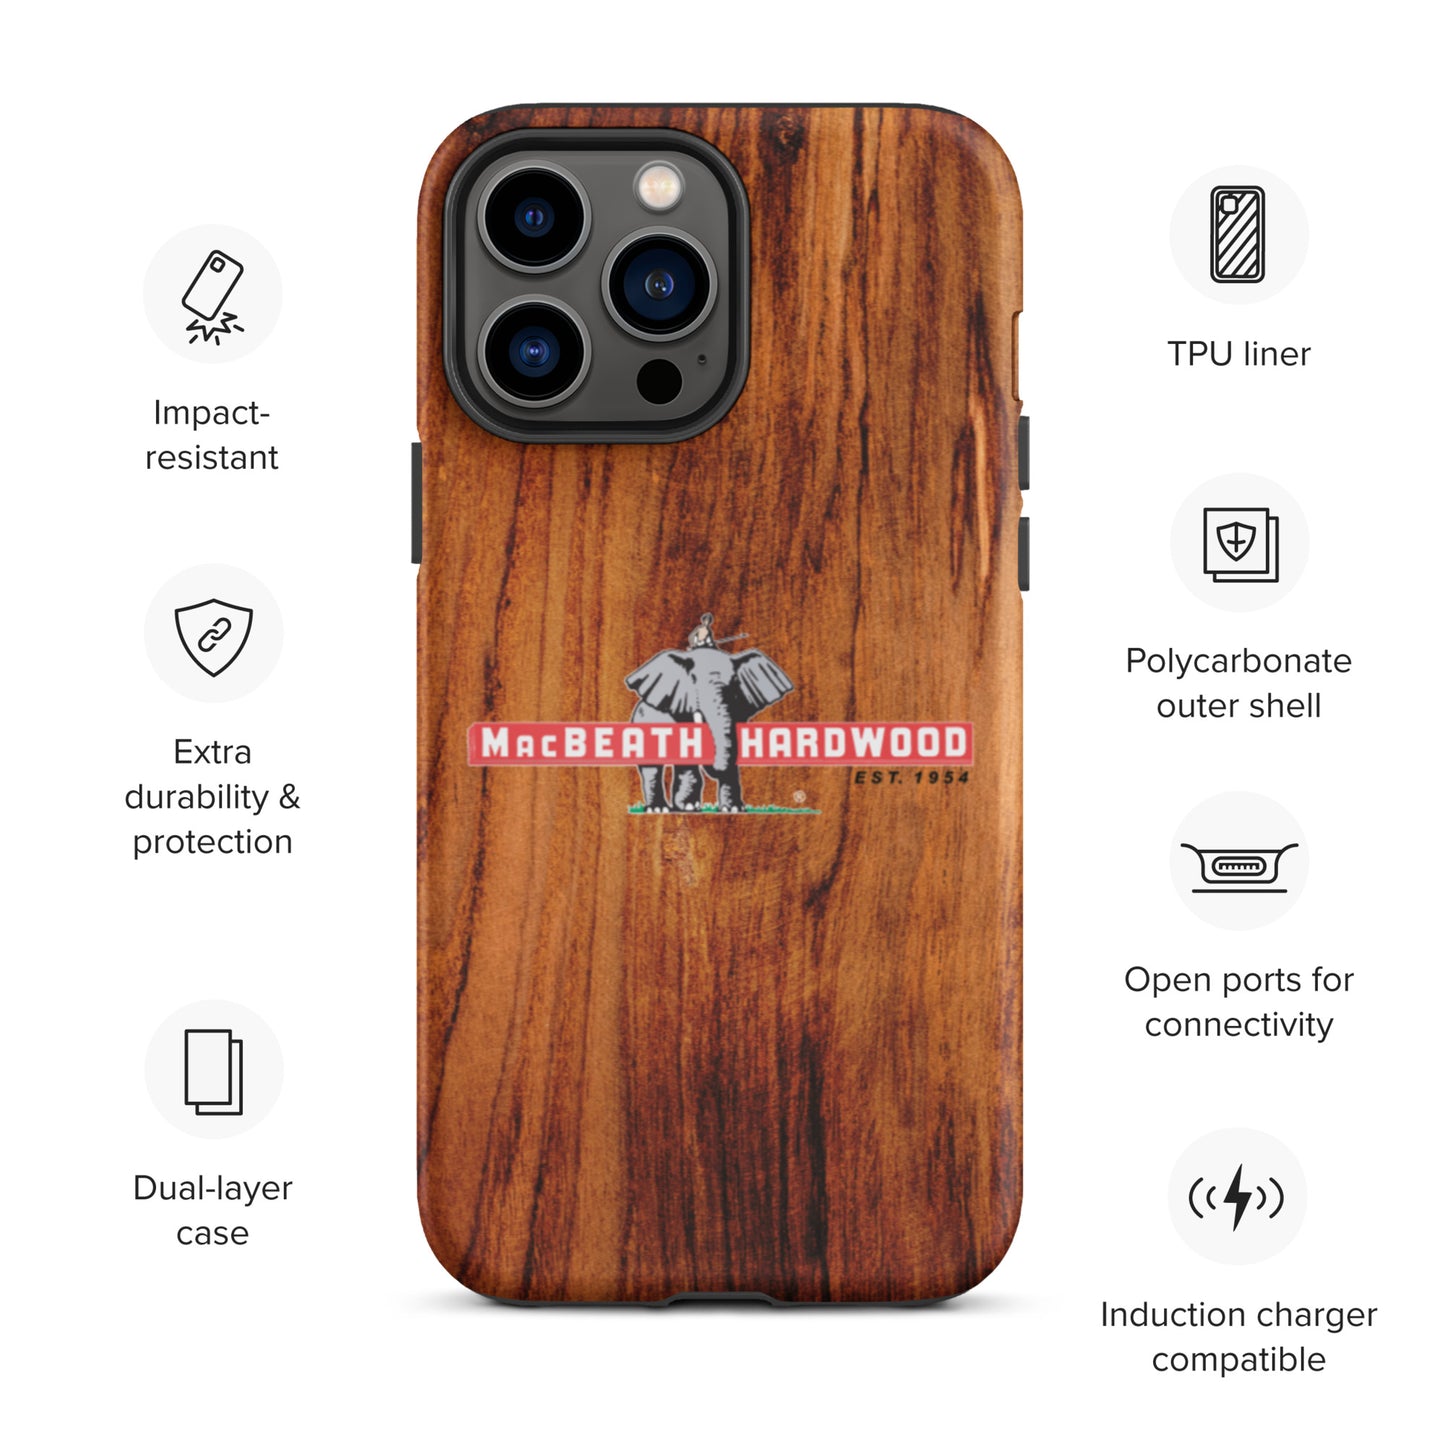 MacBeath Hardwood Tough iPhone case